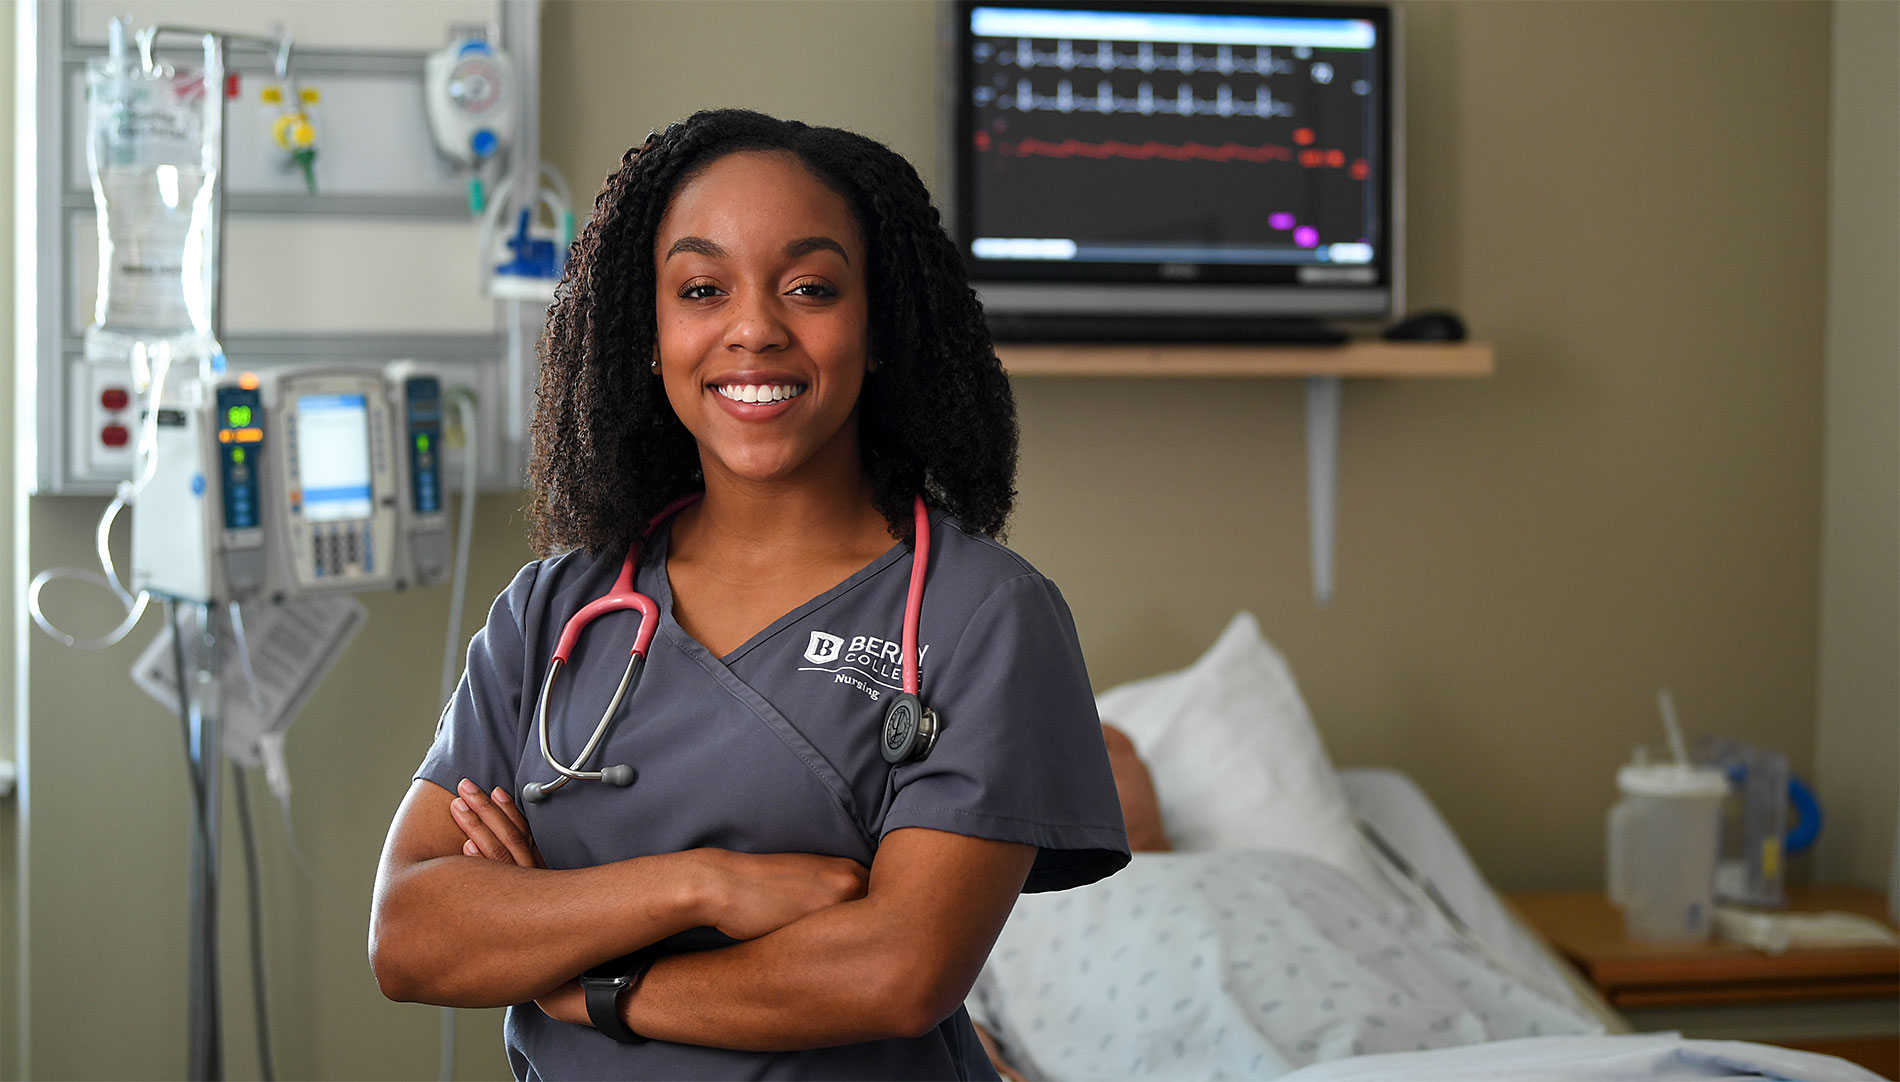             Real-world training prepares student nurse for success     